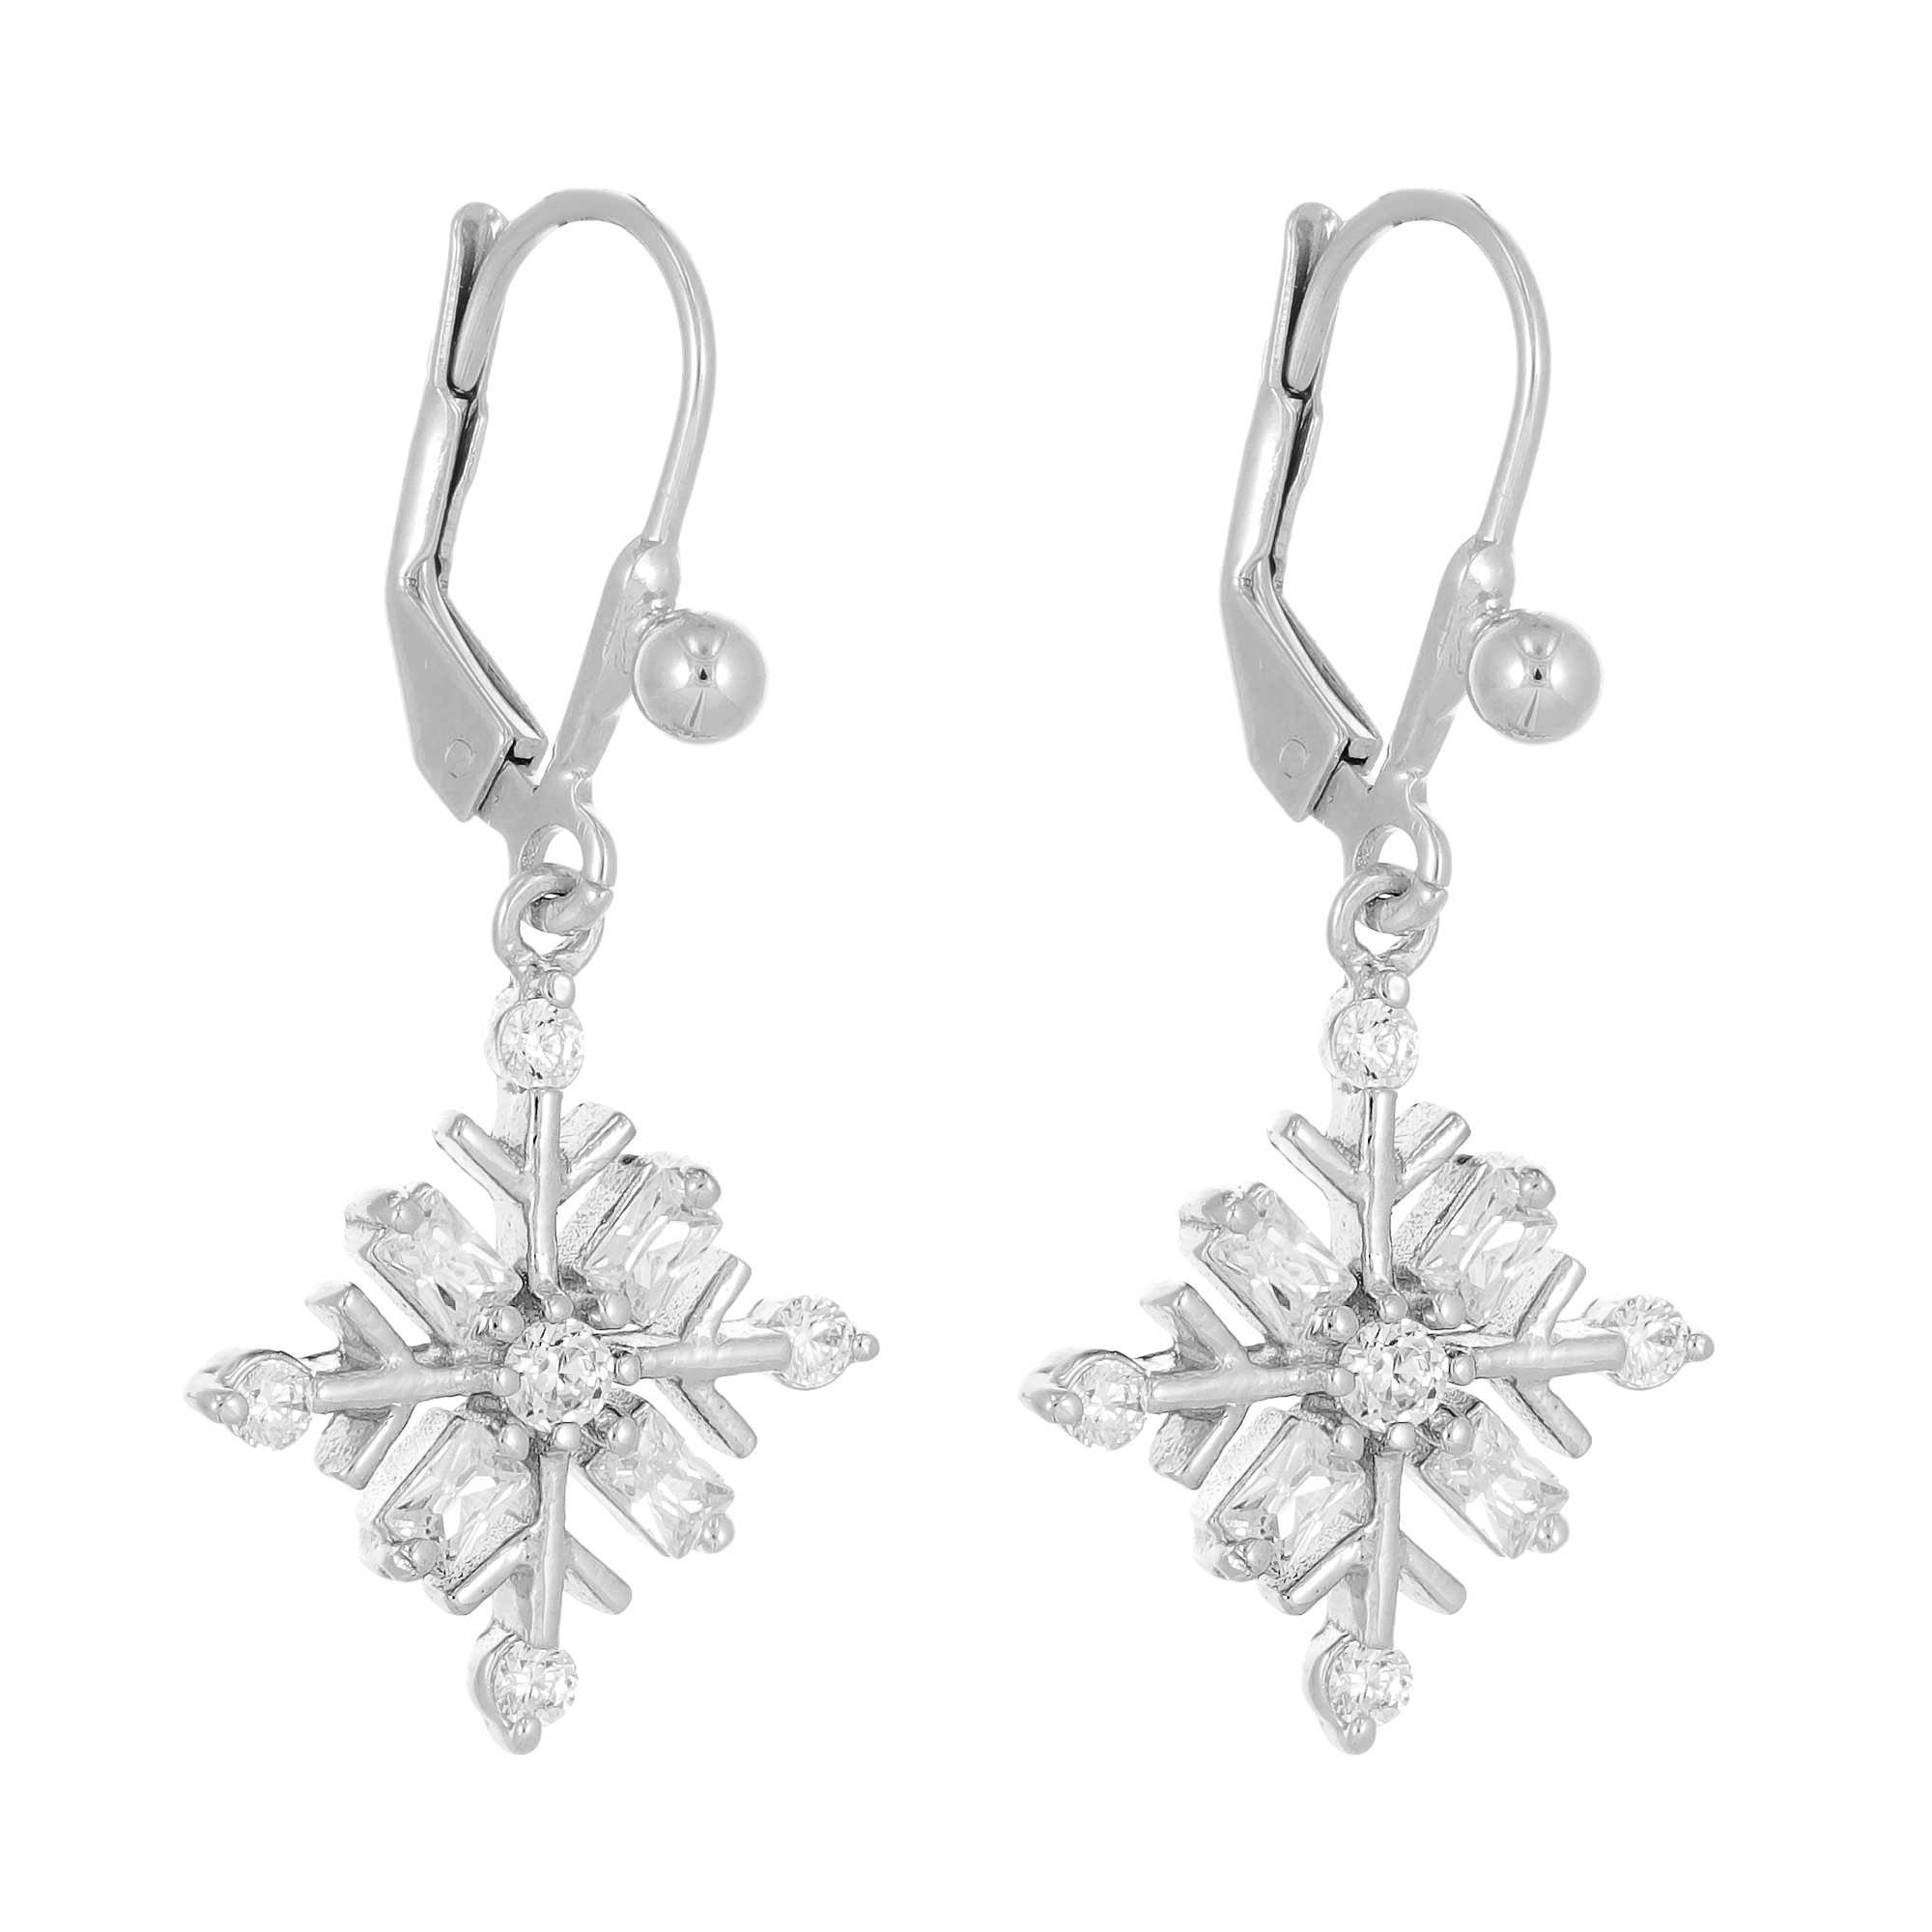 44616-earrings-fashion-jewelry-sterling-silver-cubic-zirconia-round-1mm-44616-2.jpg